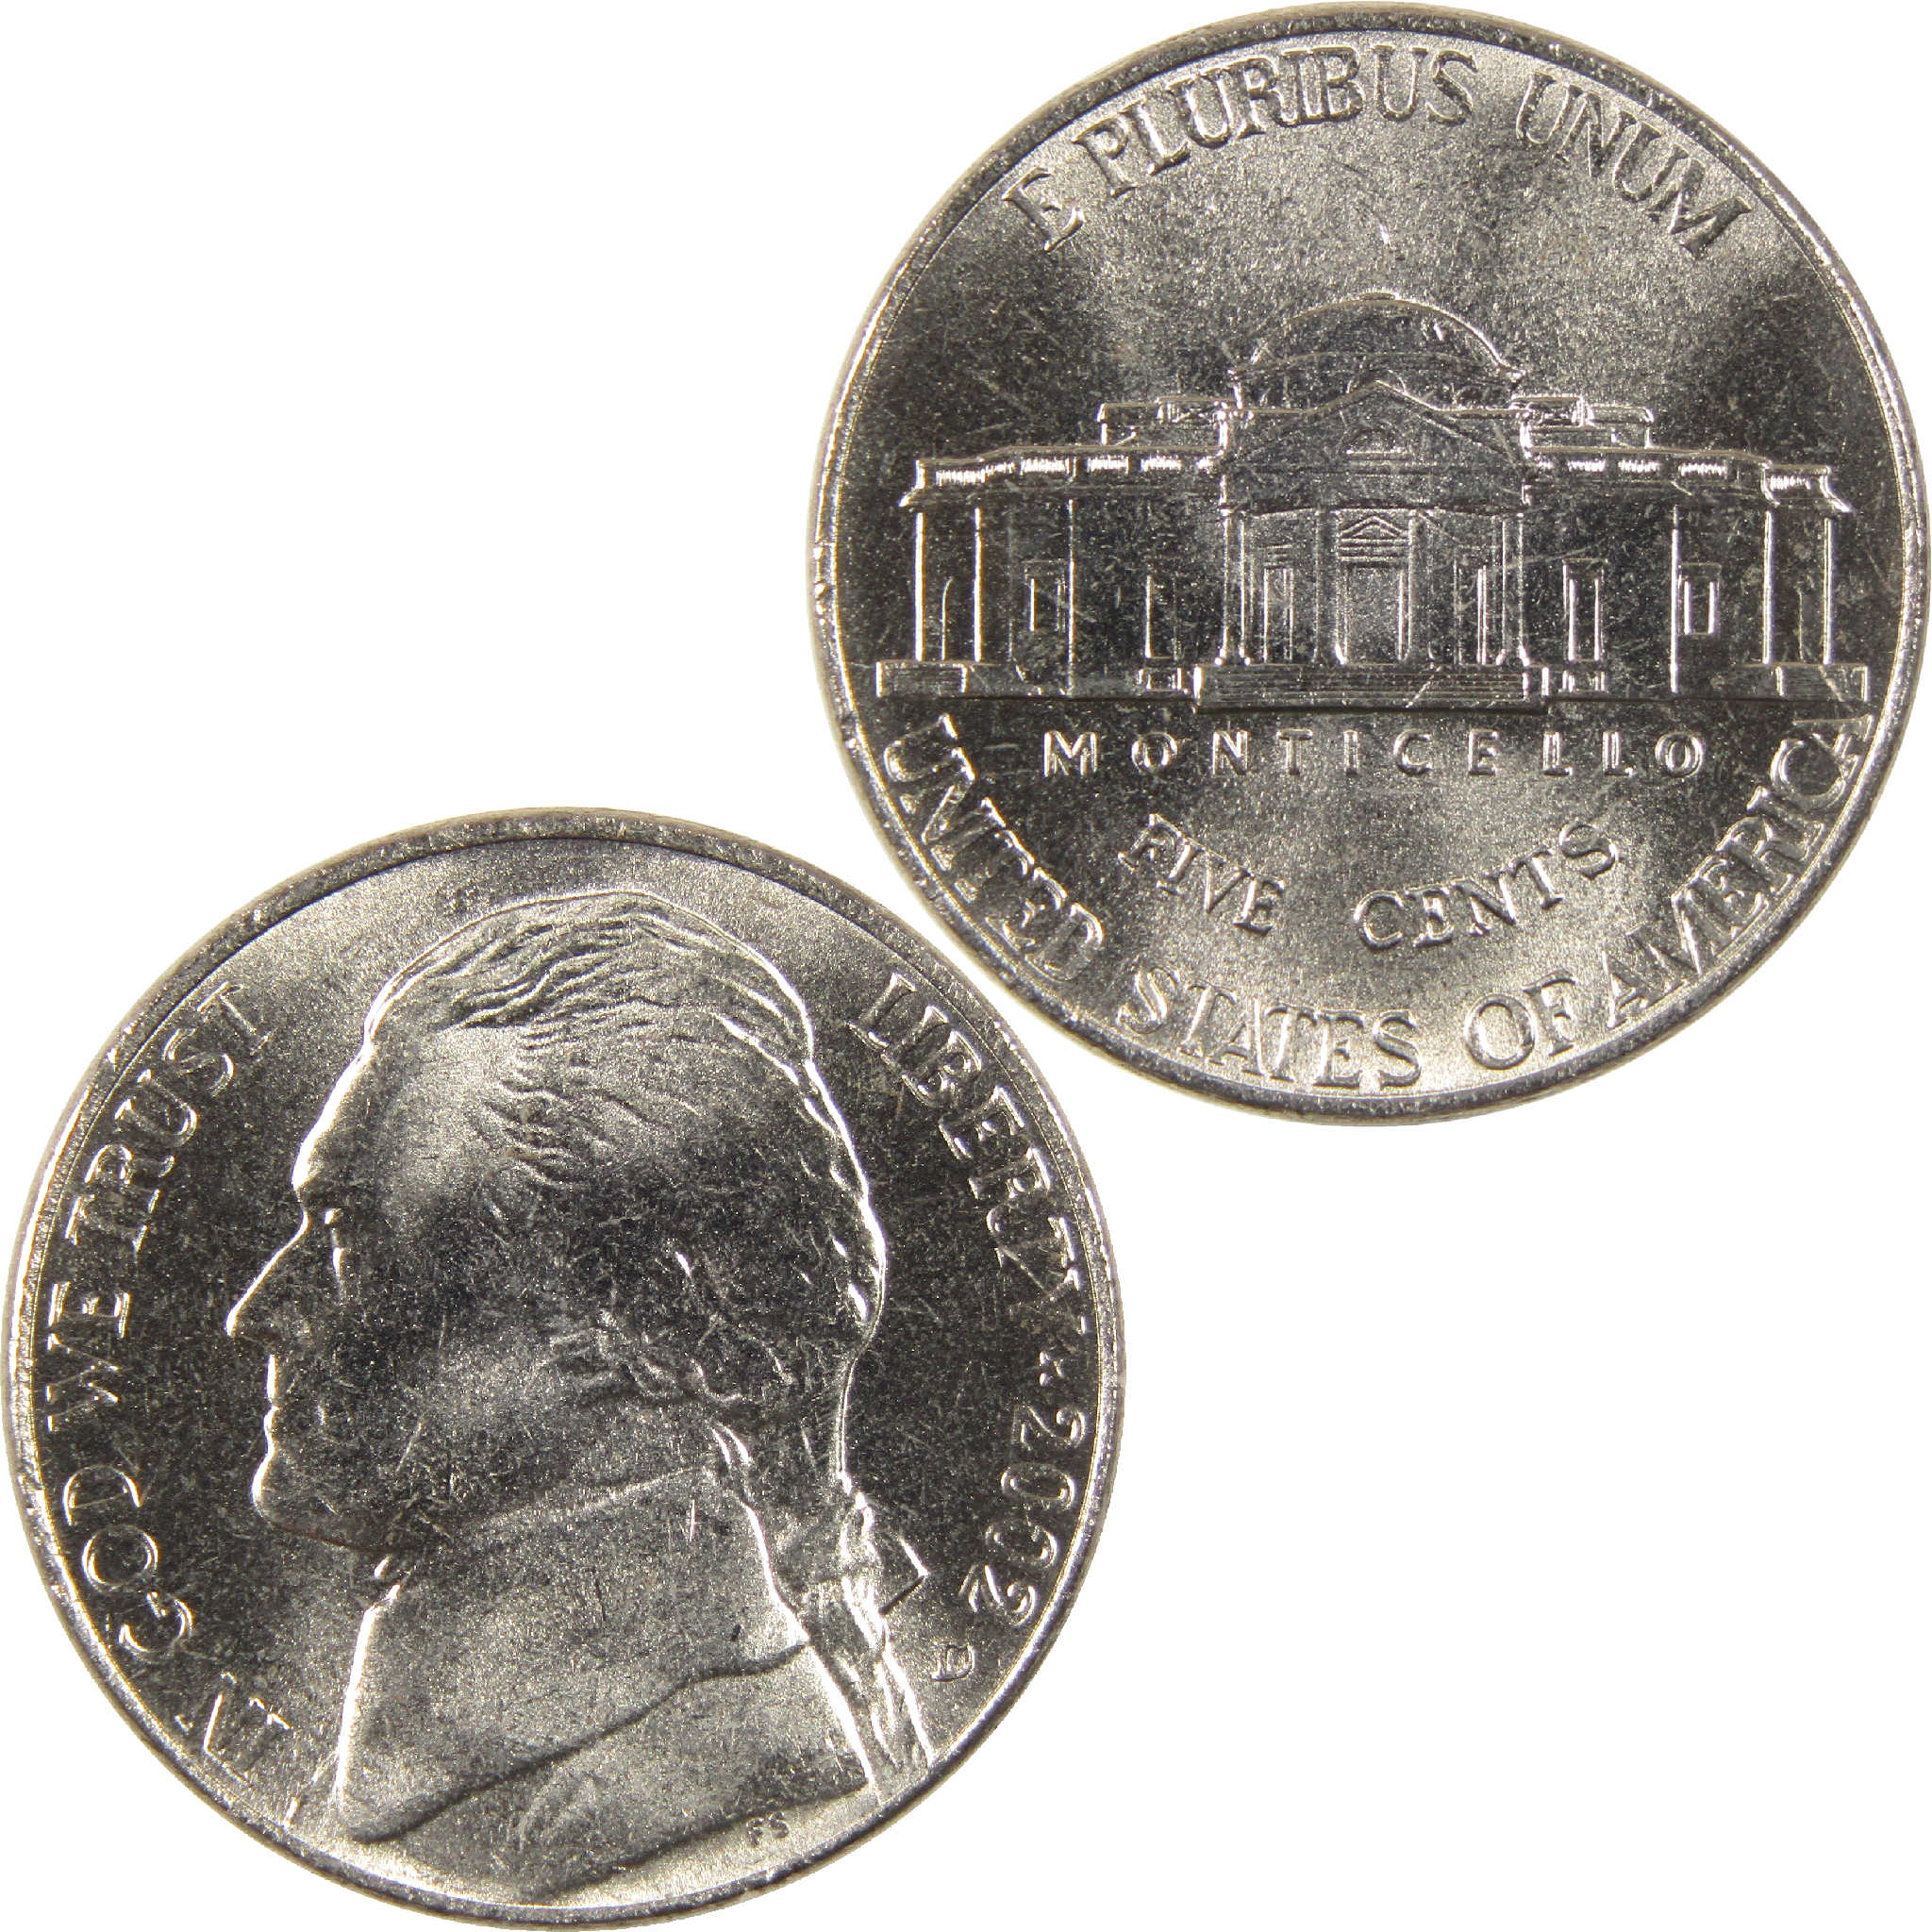 2002 D Jefferson Nickel BU Uncirculated 5c Coin